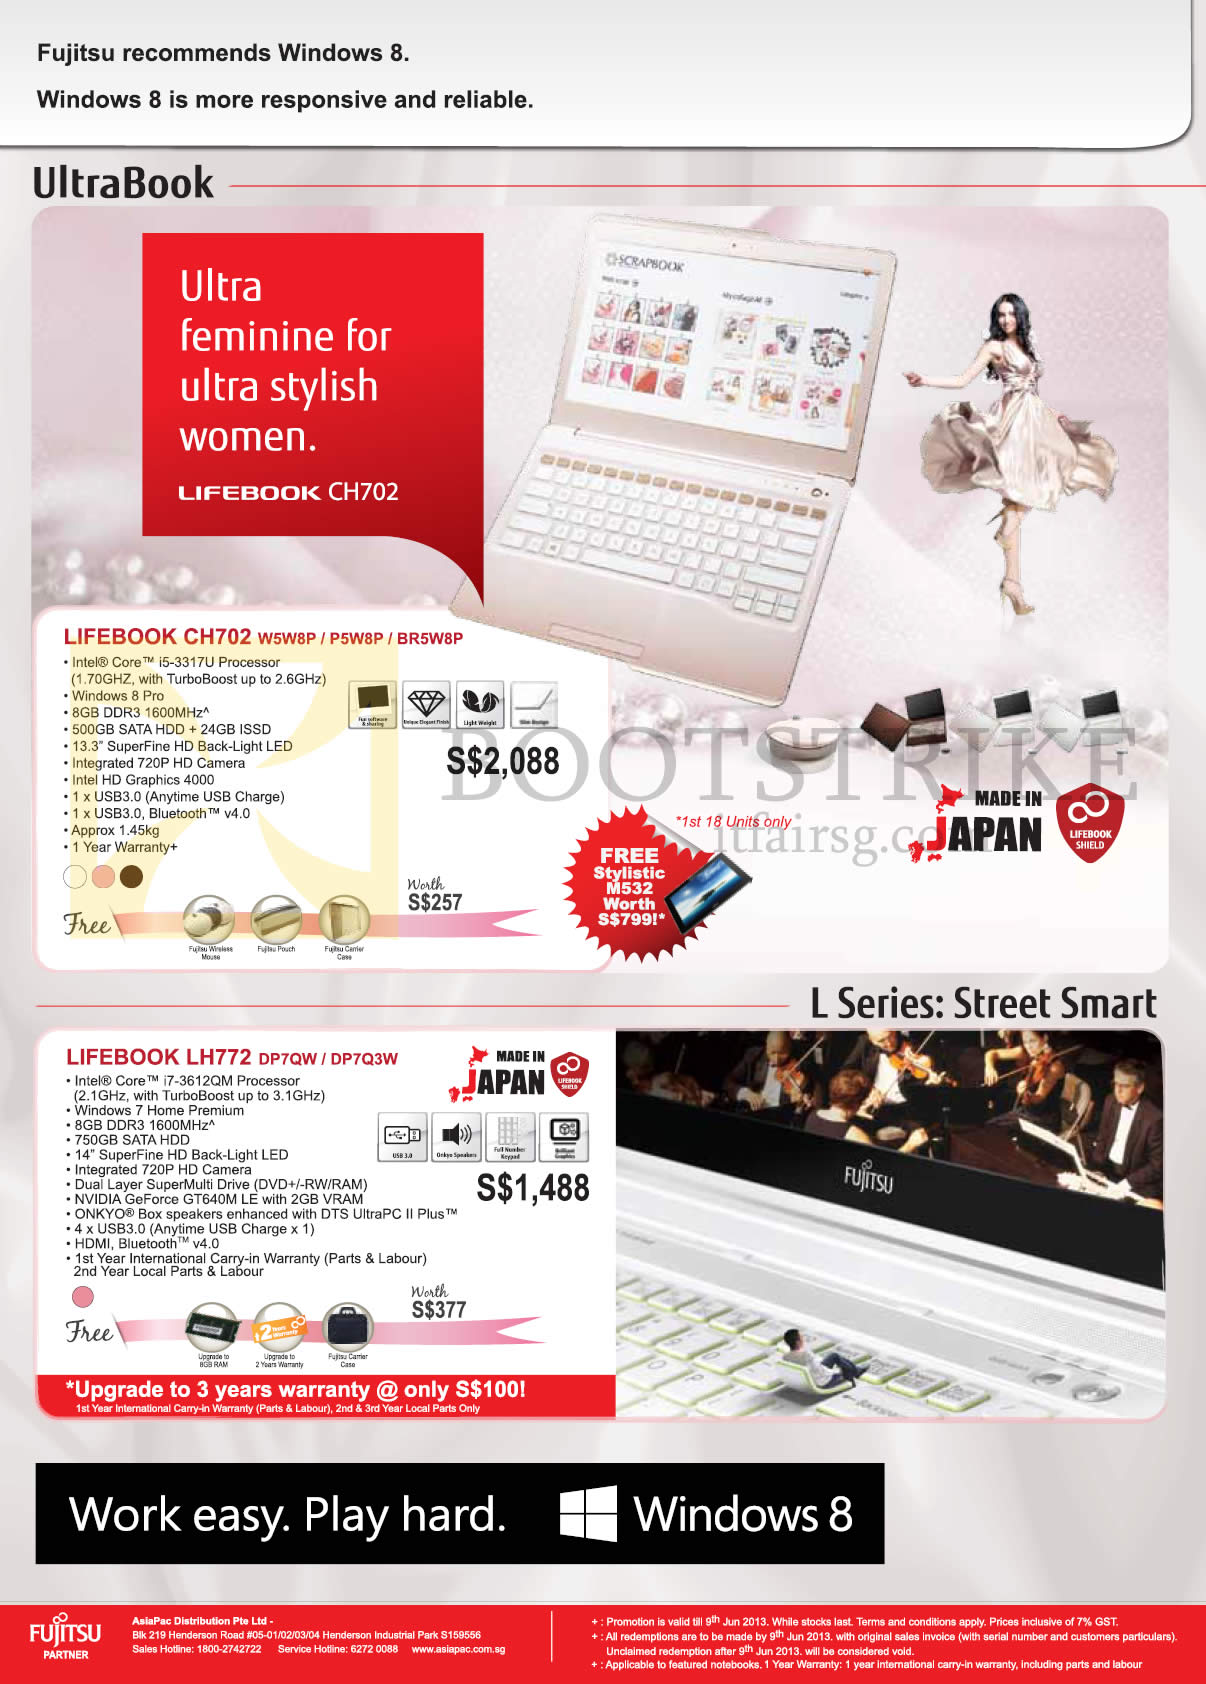 PC SHOW 2013 price list image brochure of Fujitsu Notebooks (Newstead B6028) Lifebook CH702 W5W8P P5W8P BR5W8P, LH772 DP7QW DP7Q3W